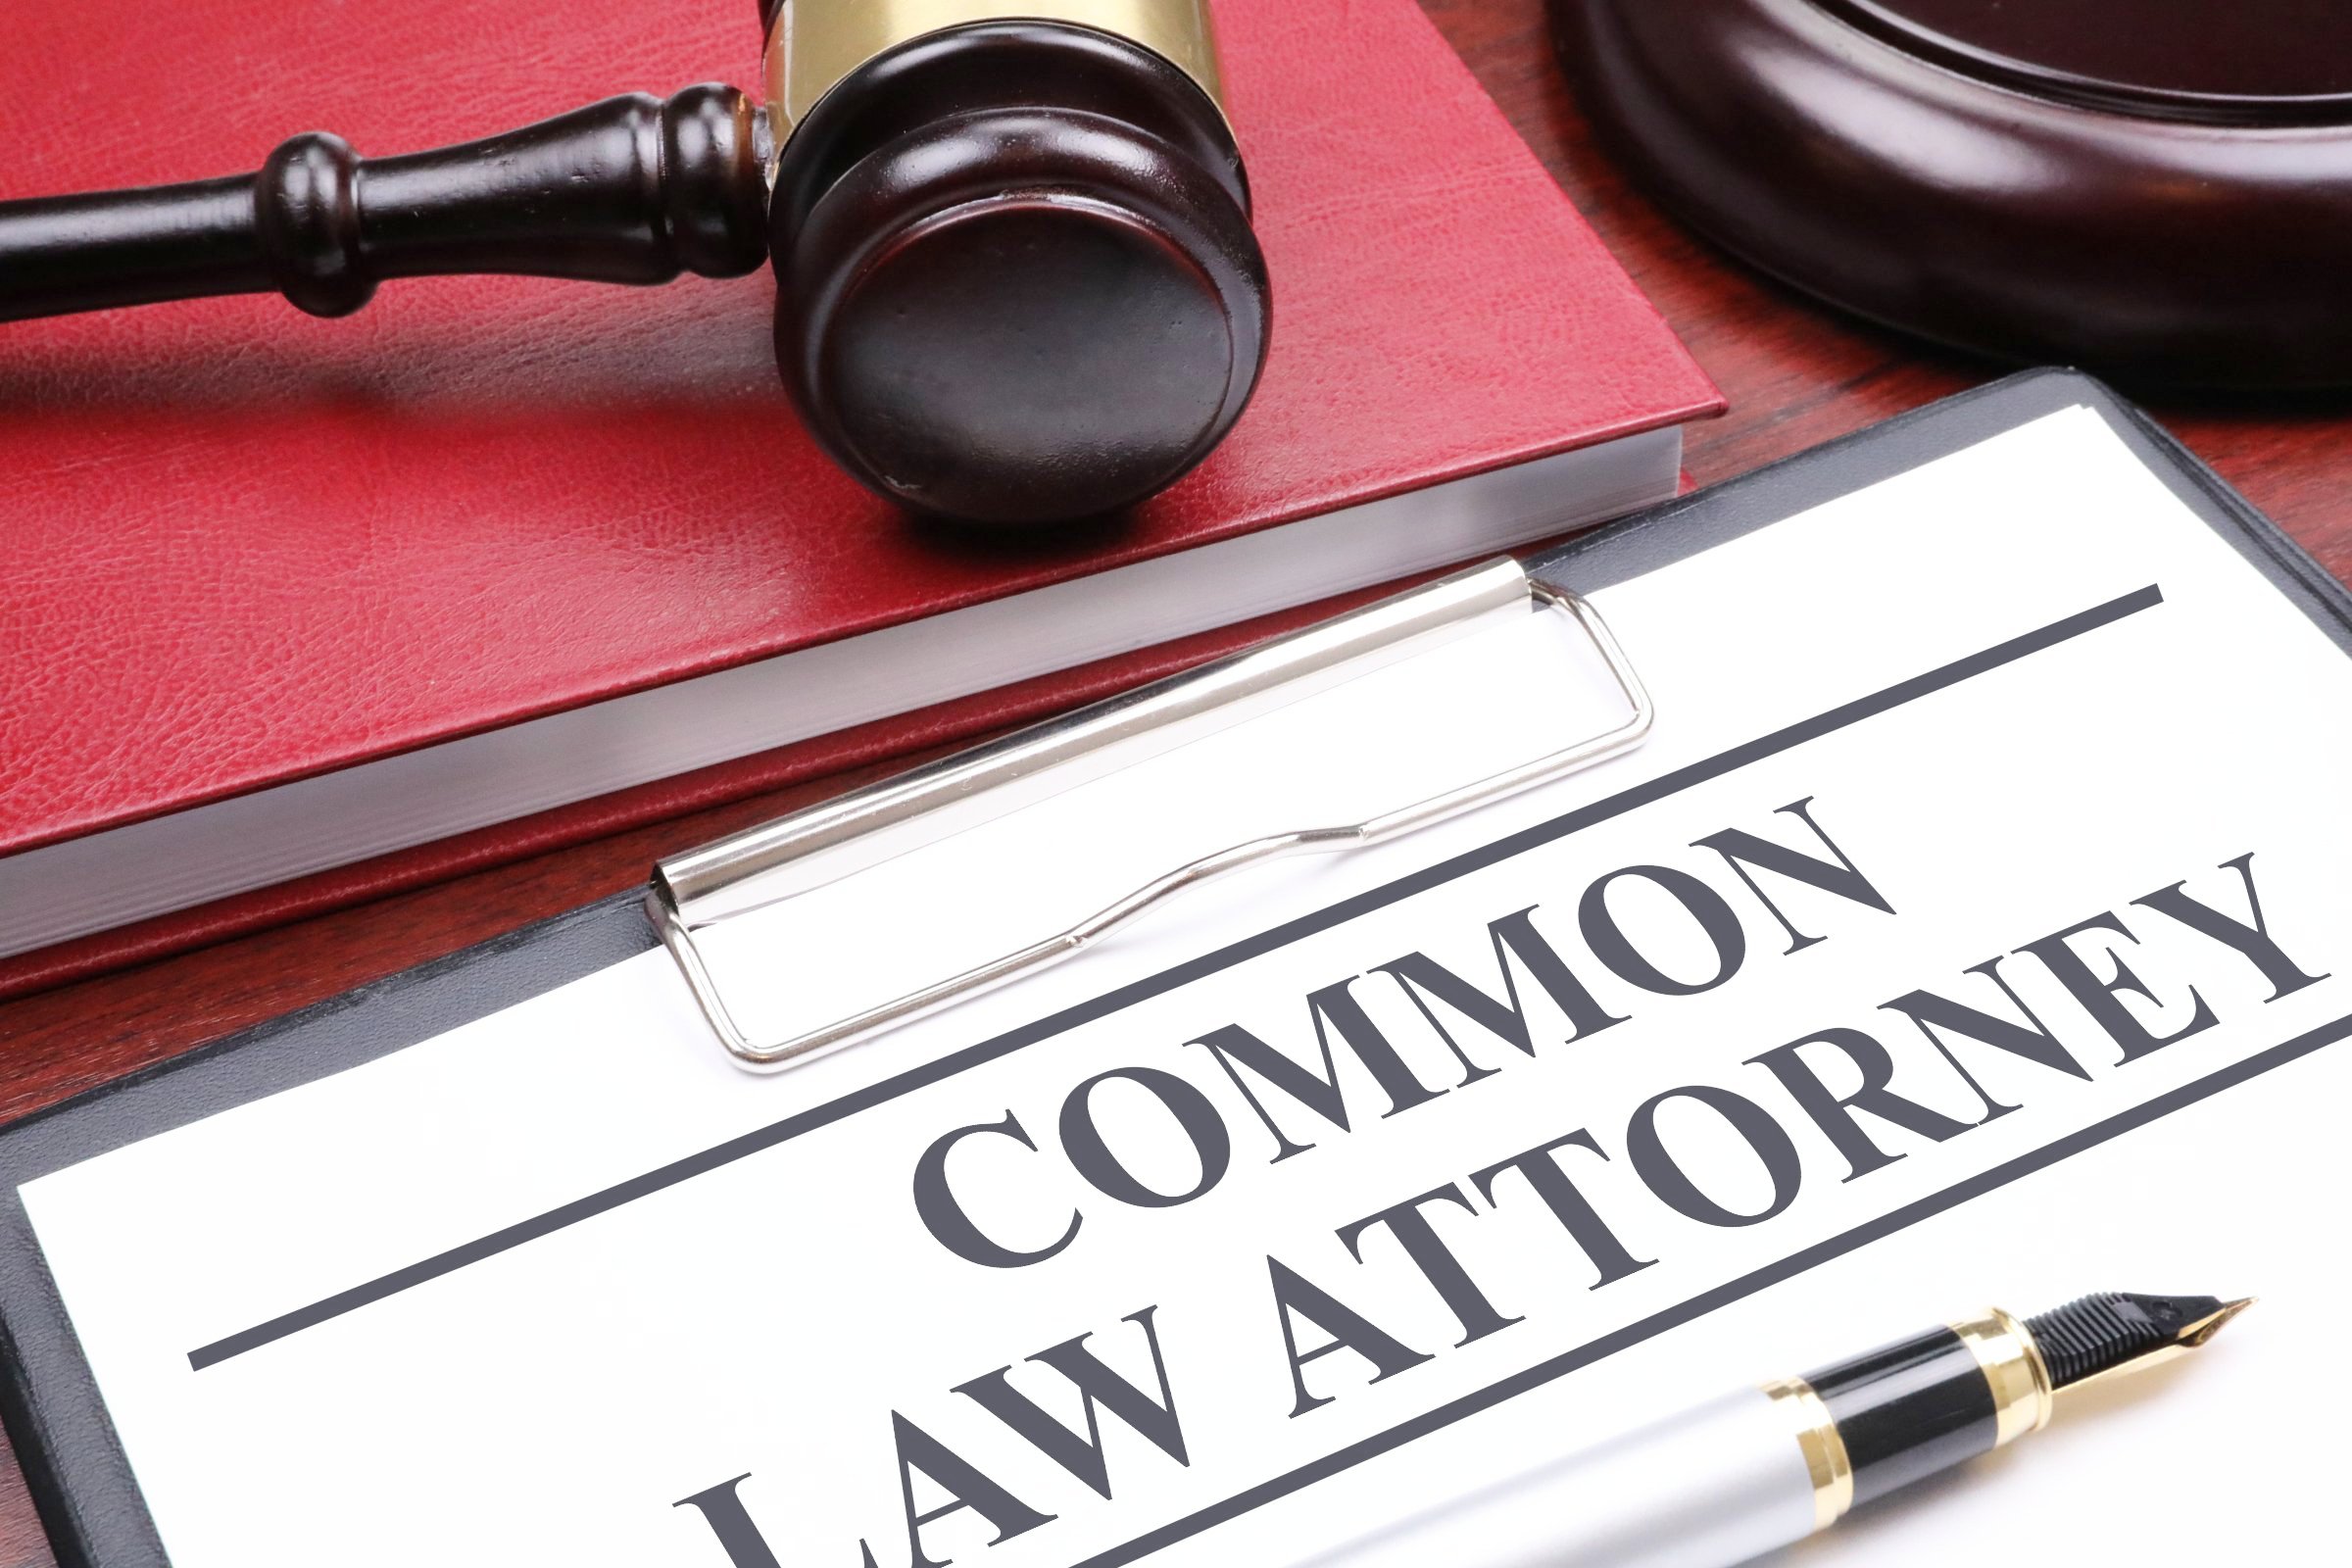 common law attorney